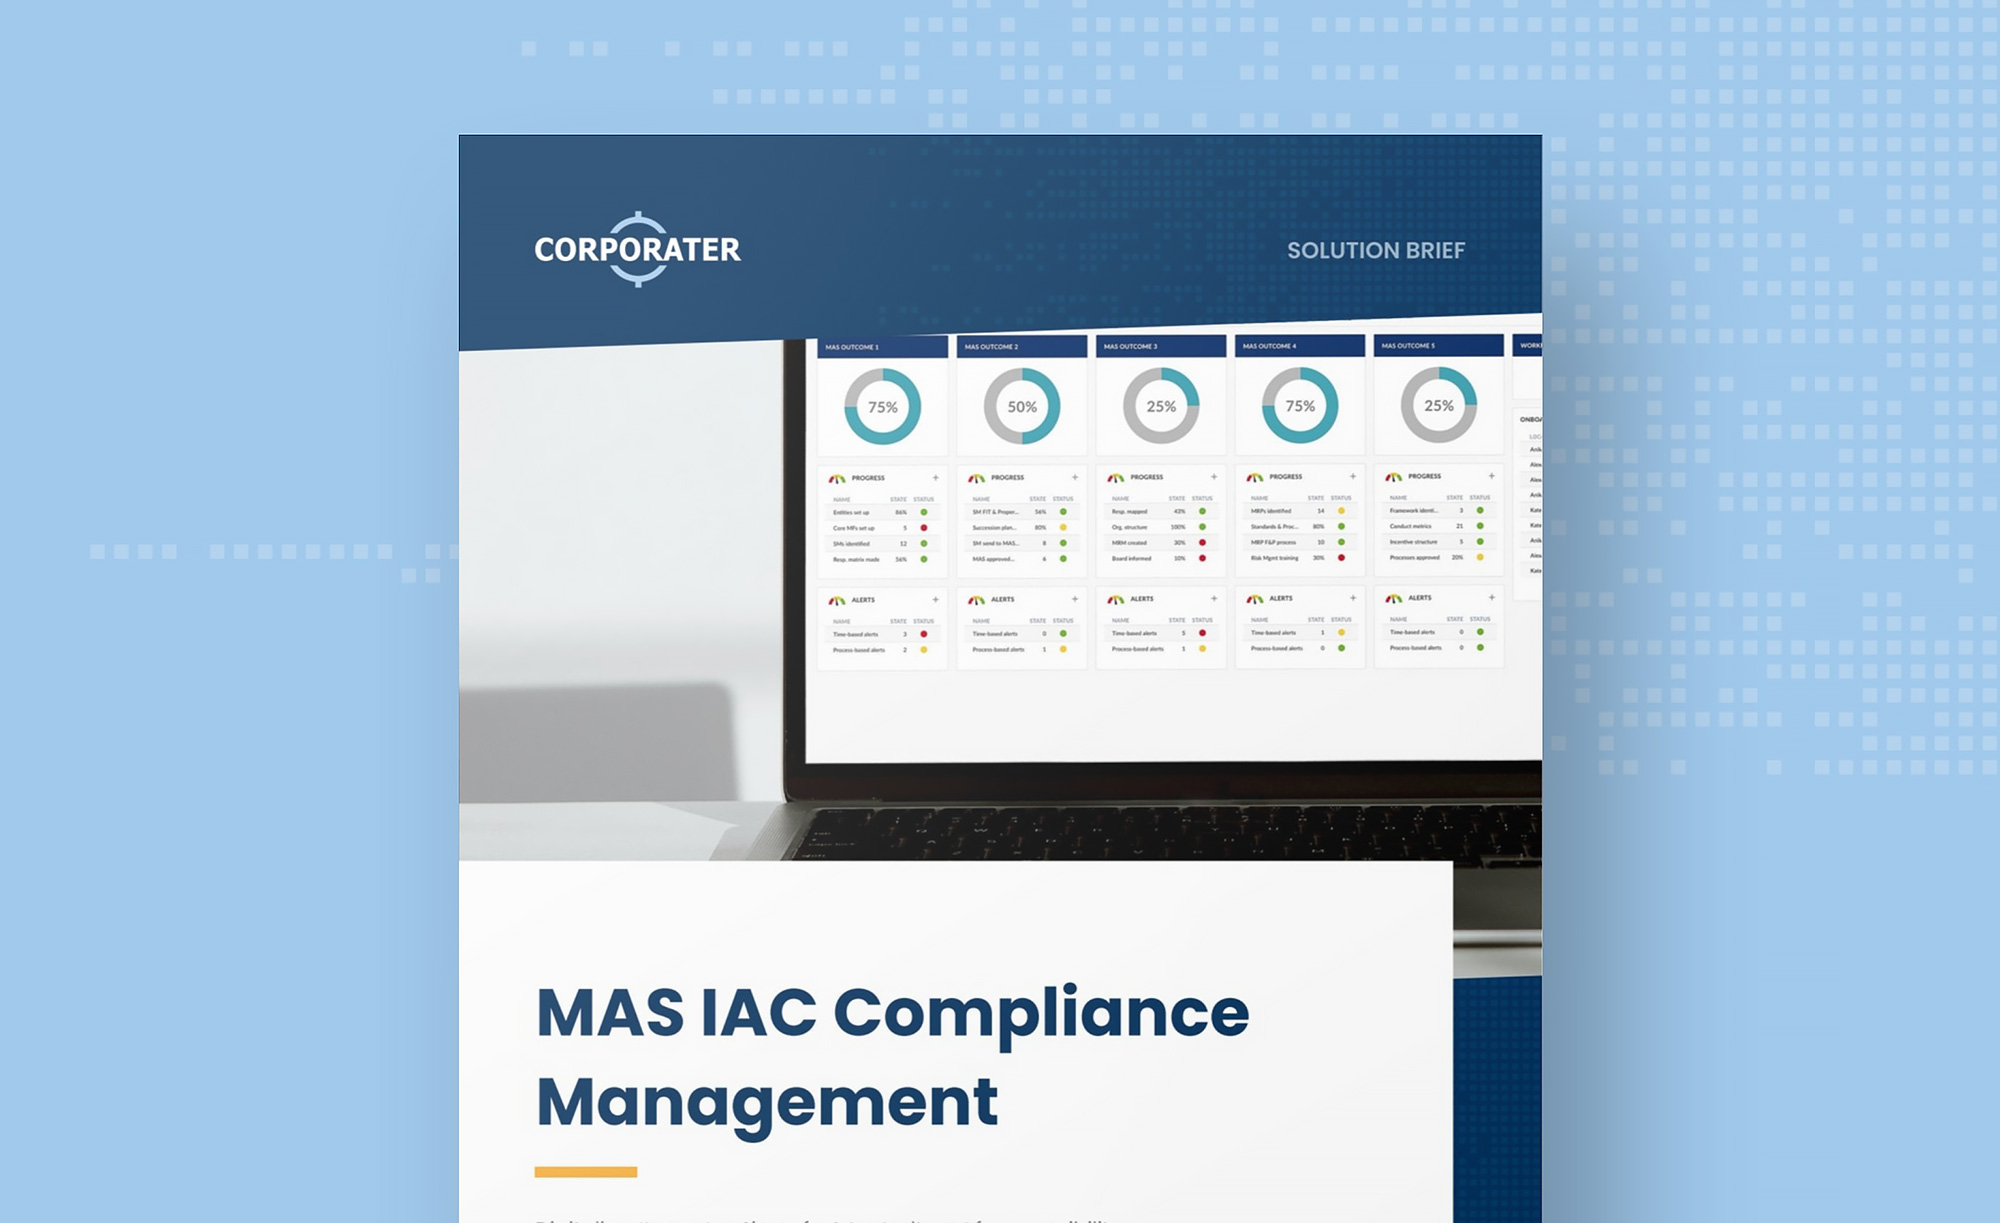 Corporater_MASIAC-Compliance-Management_SolutionBrief